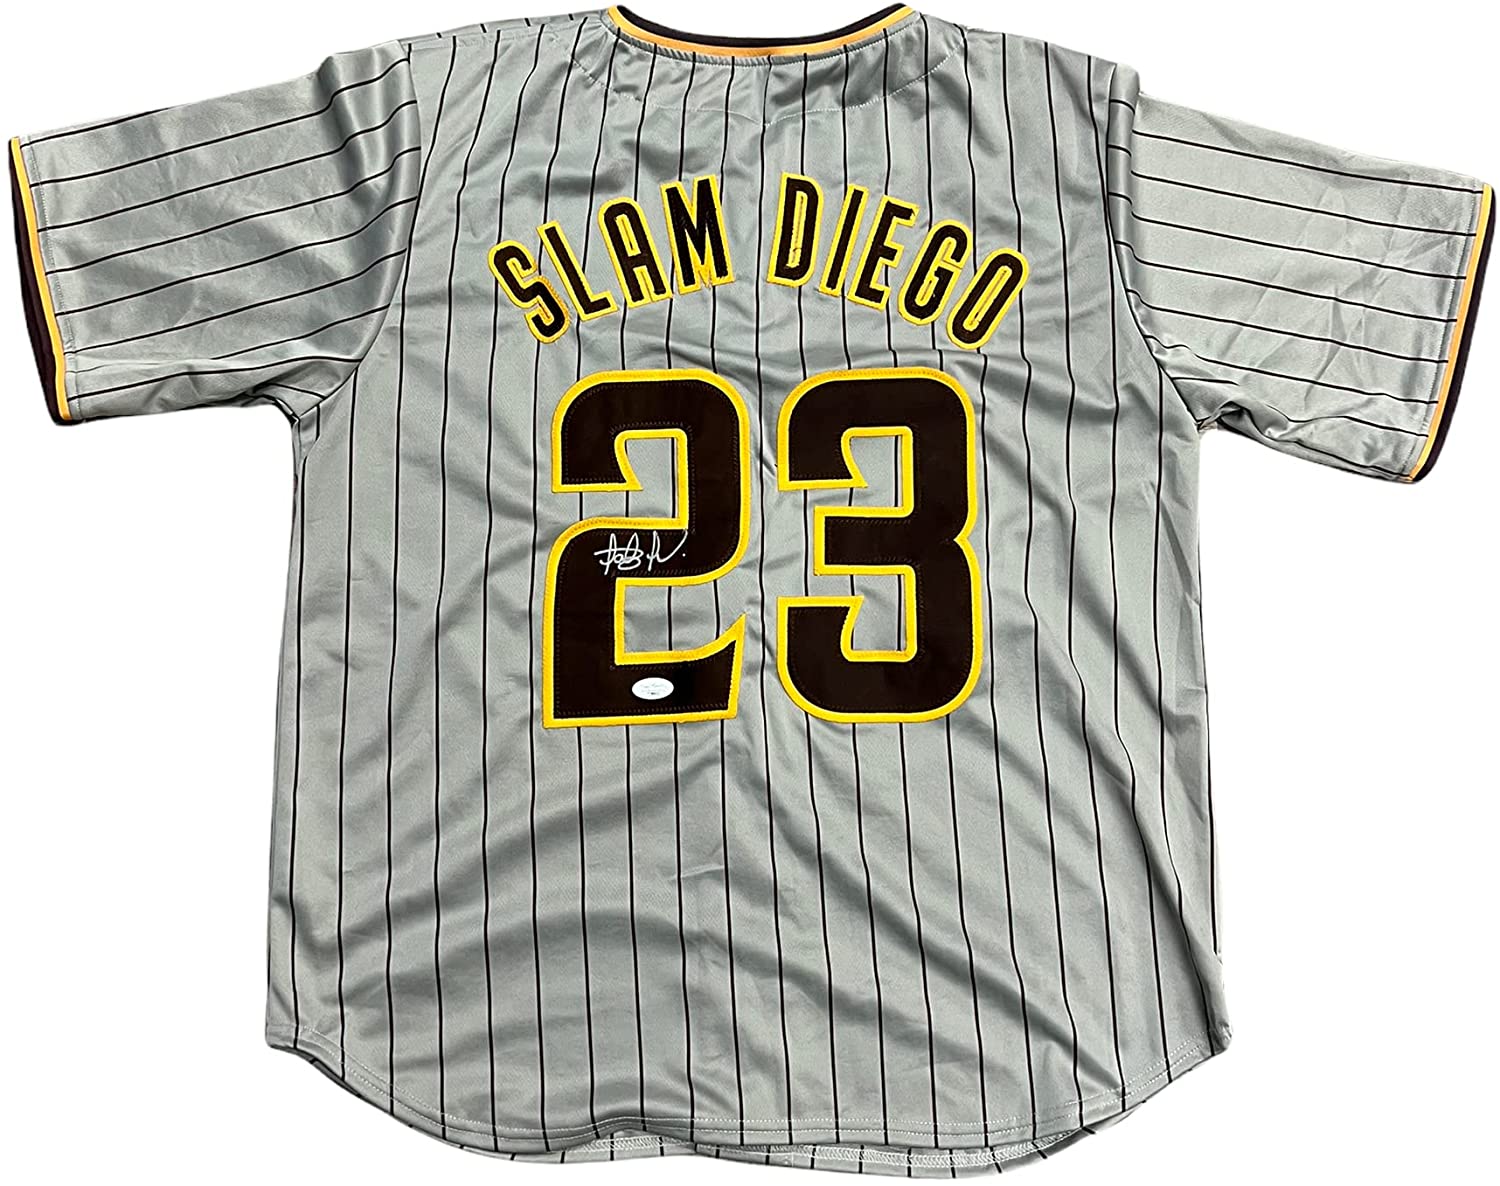 San Diego Padres-slam DIEGO 